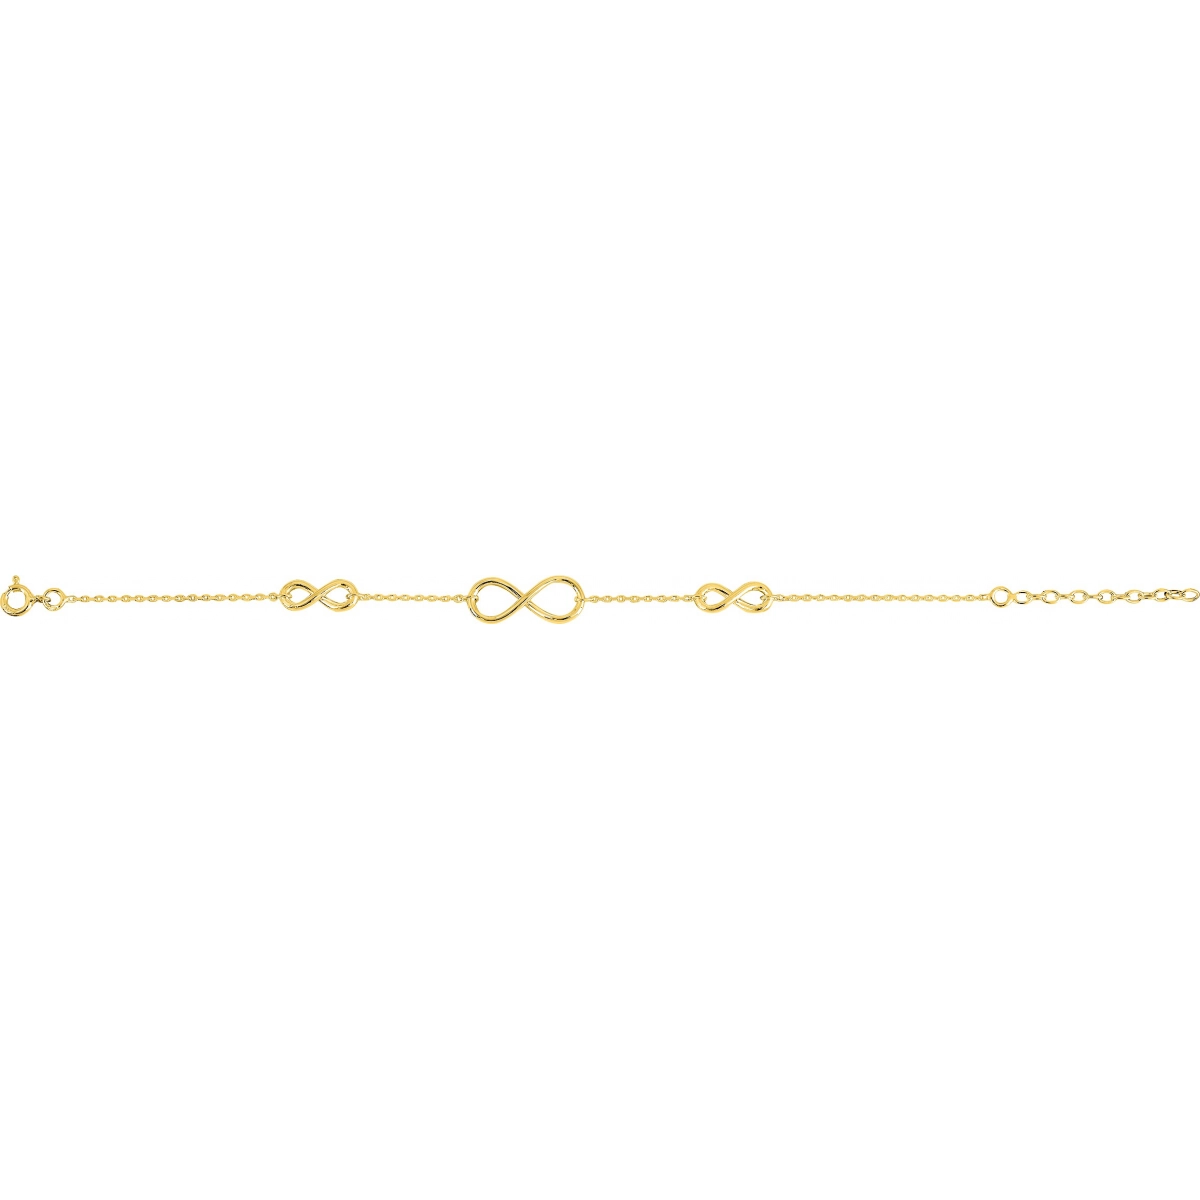 Bracelet gold plated Brass - Size: 18  Lua Blanca  133195.18